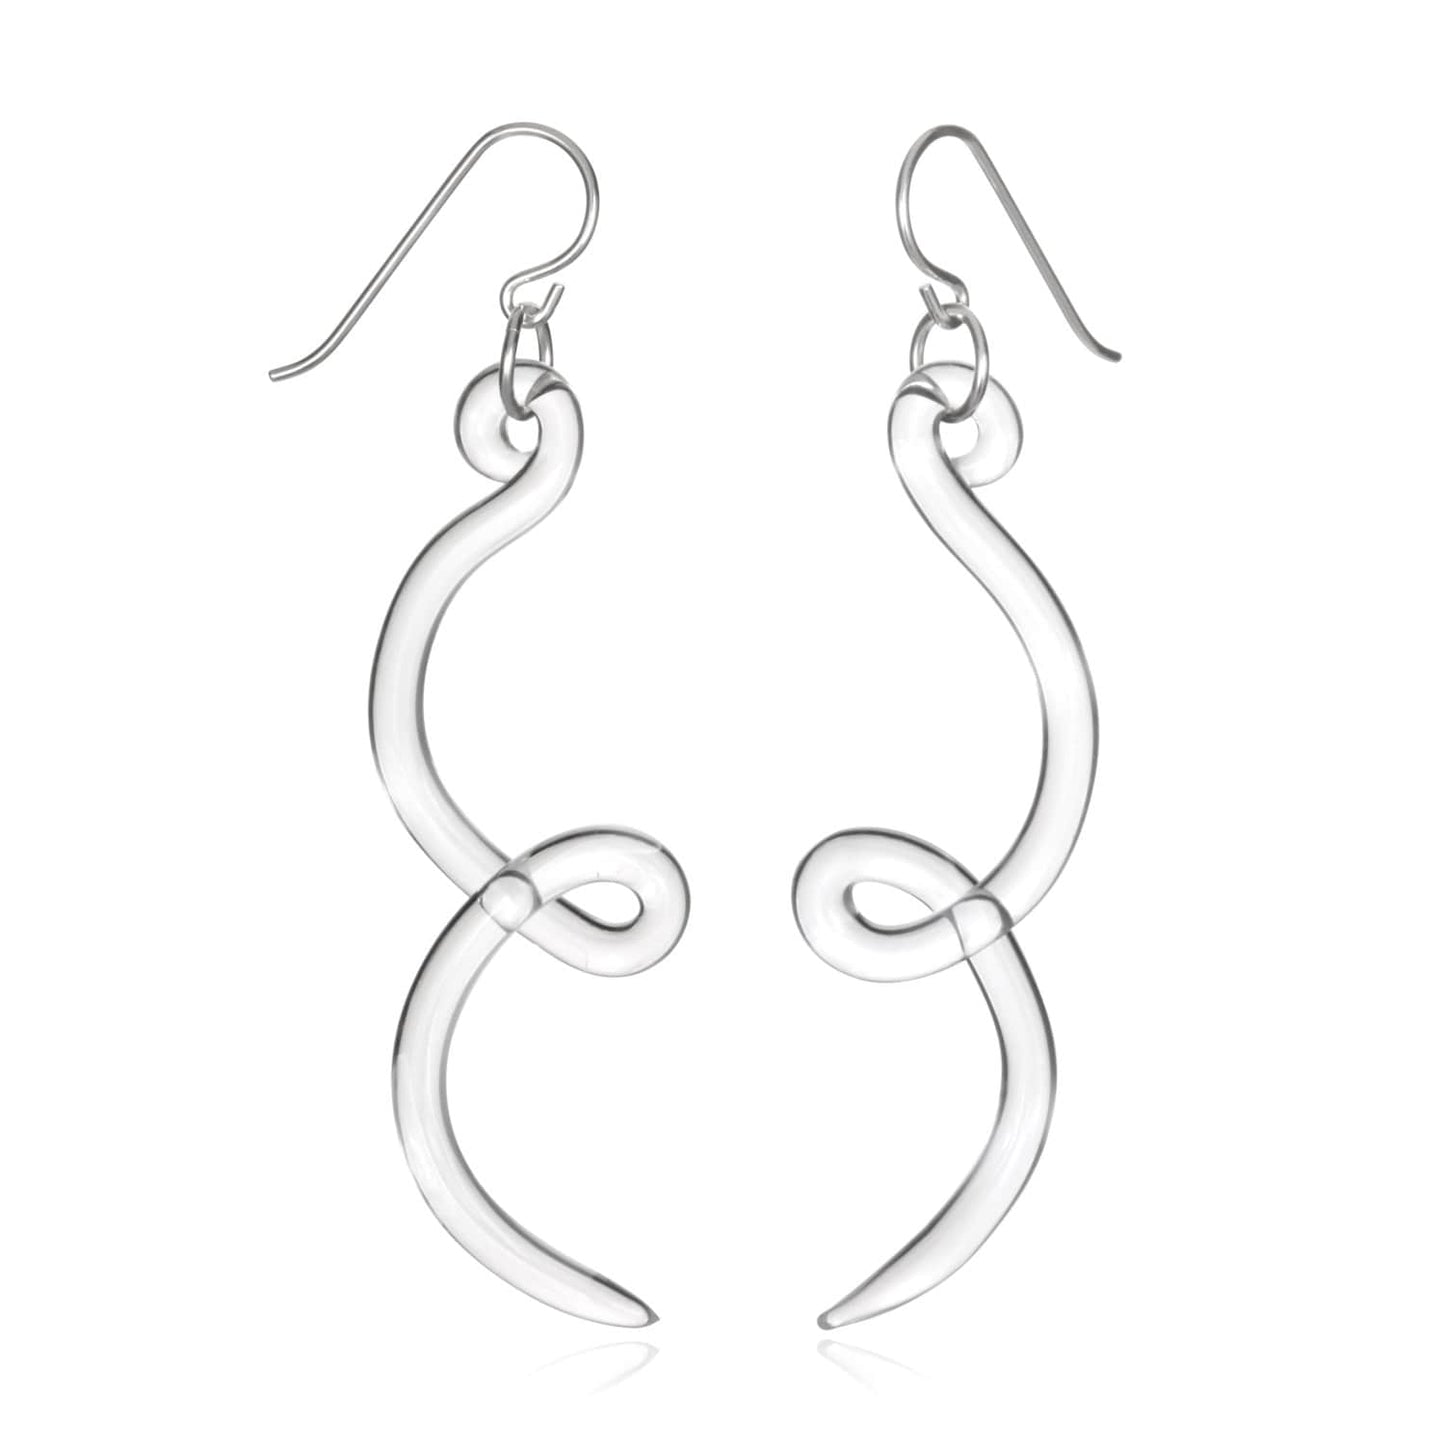 Cursive Curve Earrings